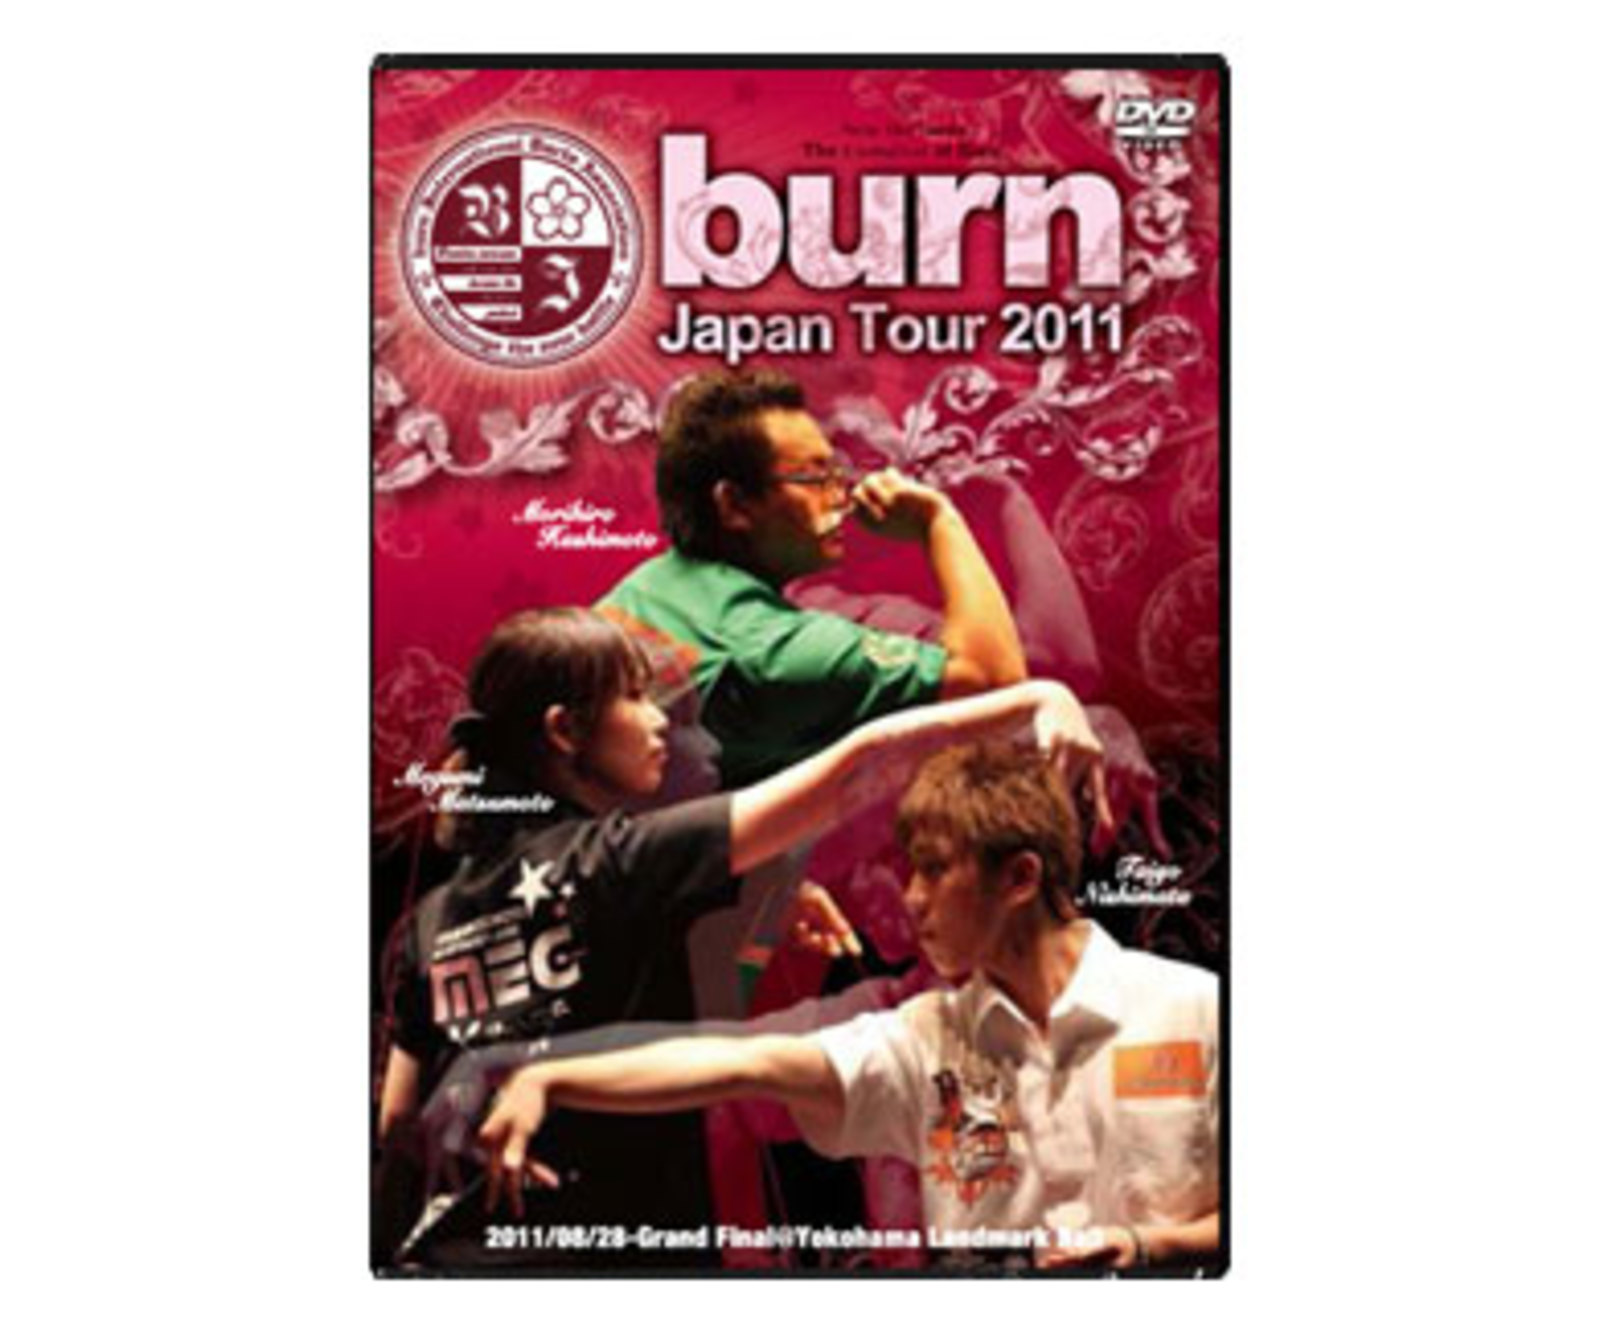 DVD burn. JAPAN TOUR 2011β